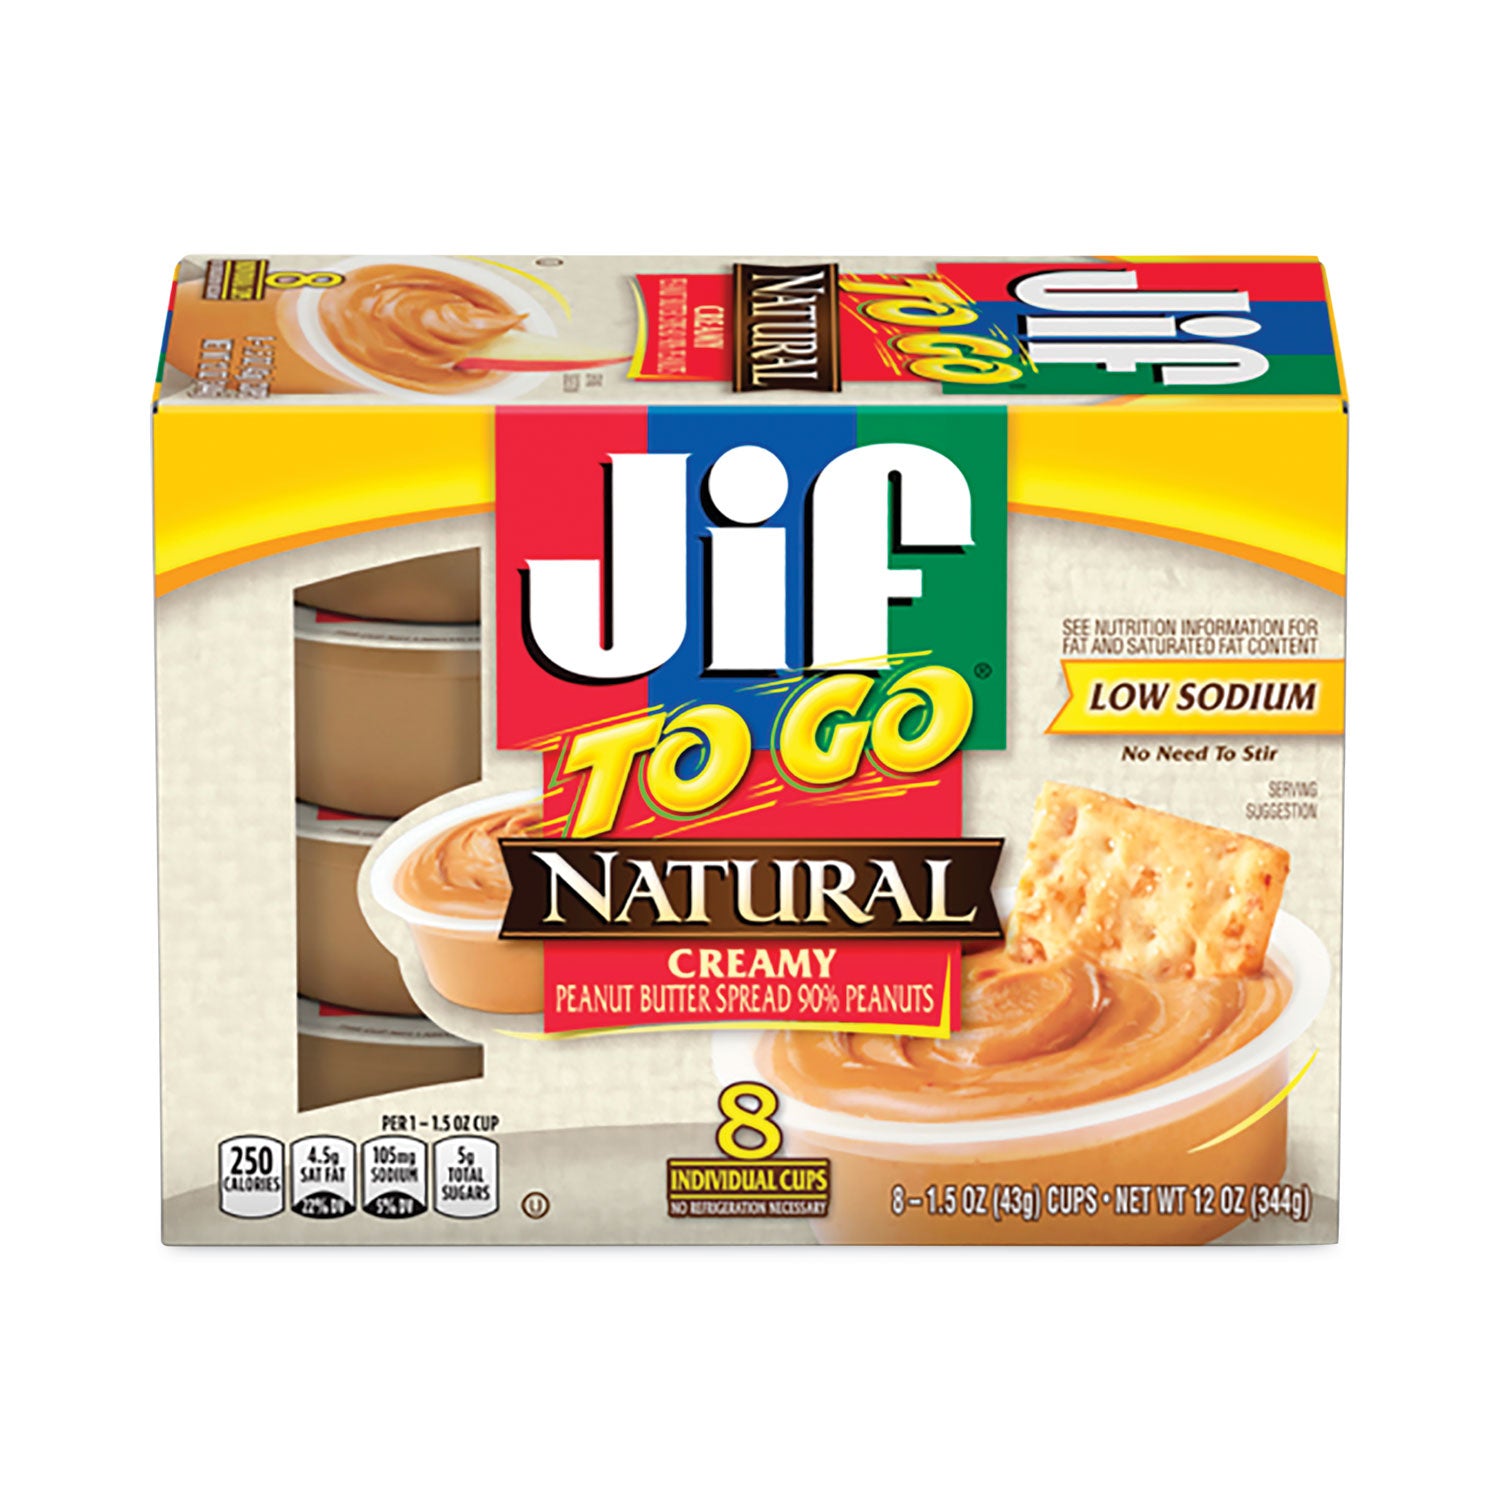 spreads-natural-creamy-peanut-butter-15-oz-cup-8-box_smusmu24307 - 1